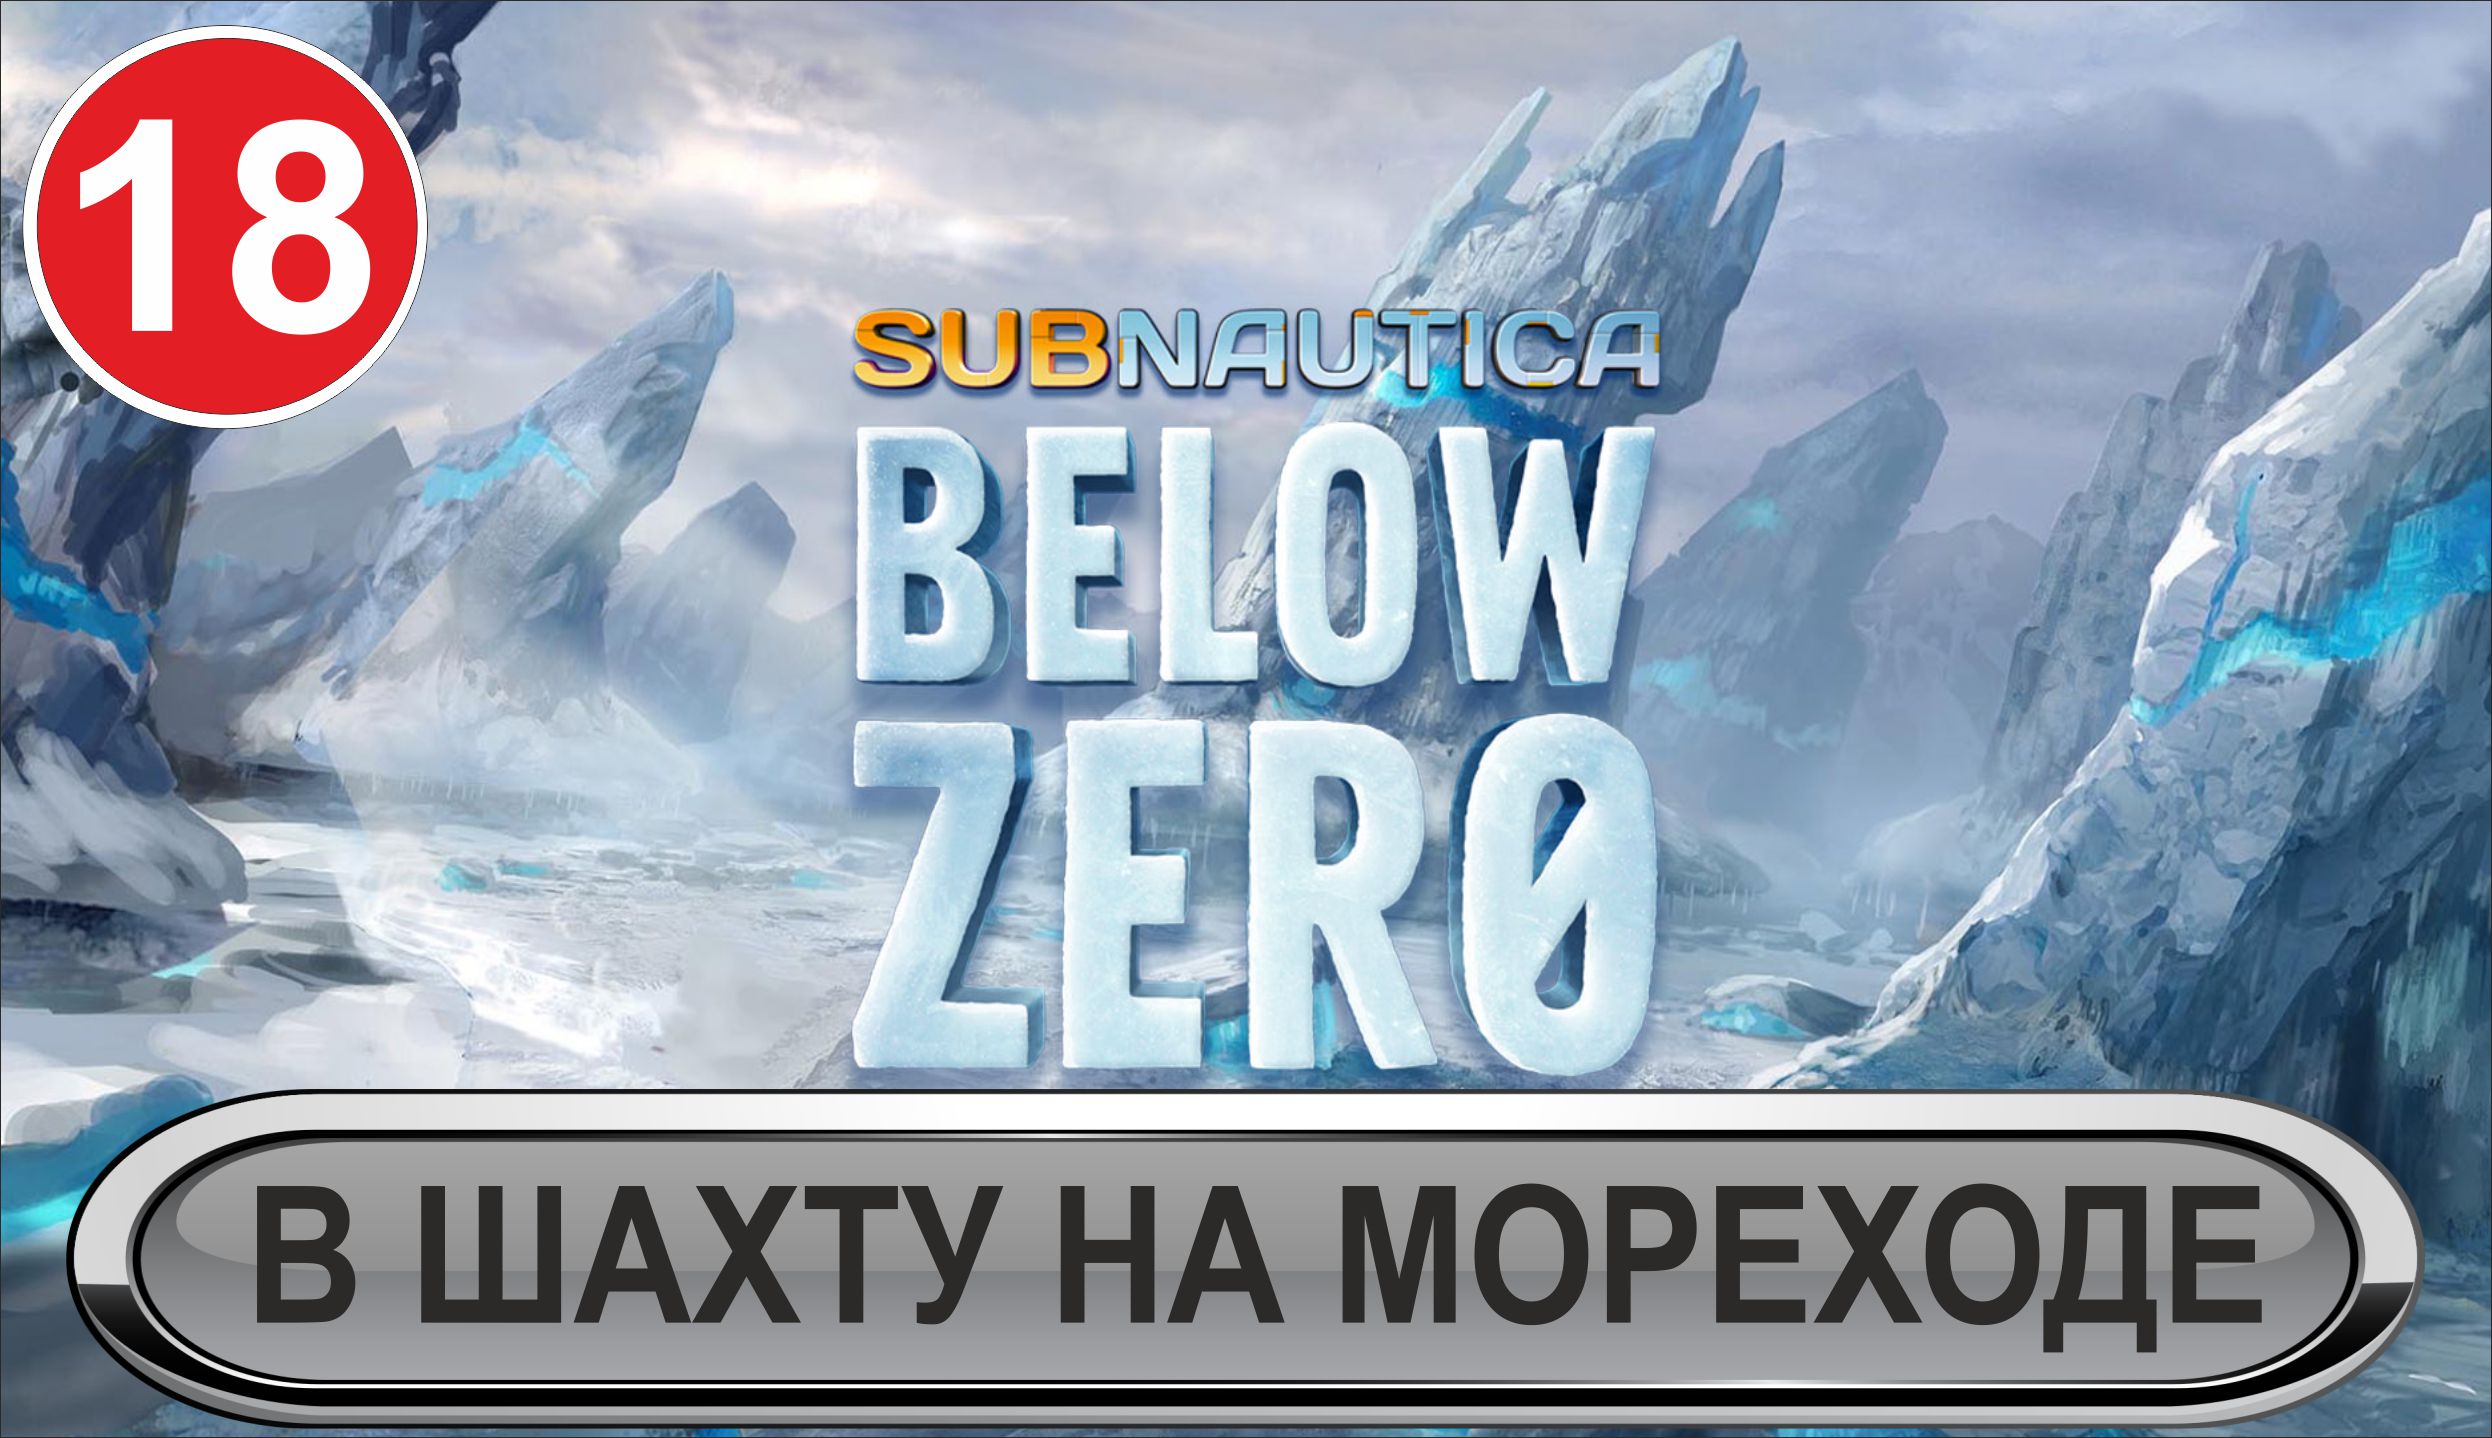 Subnautica: Below Zero - В шахту на Мореходе